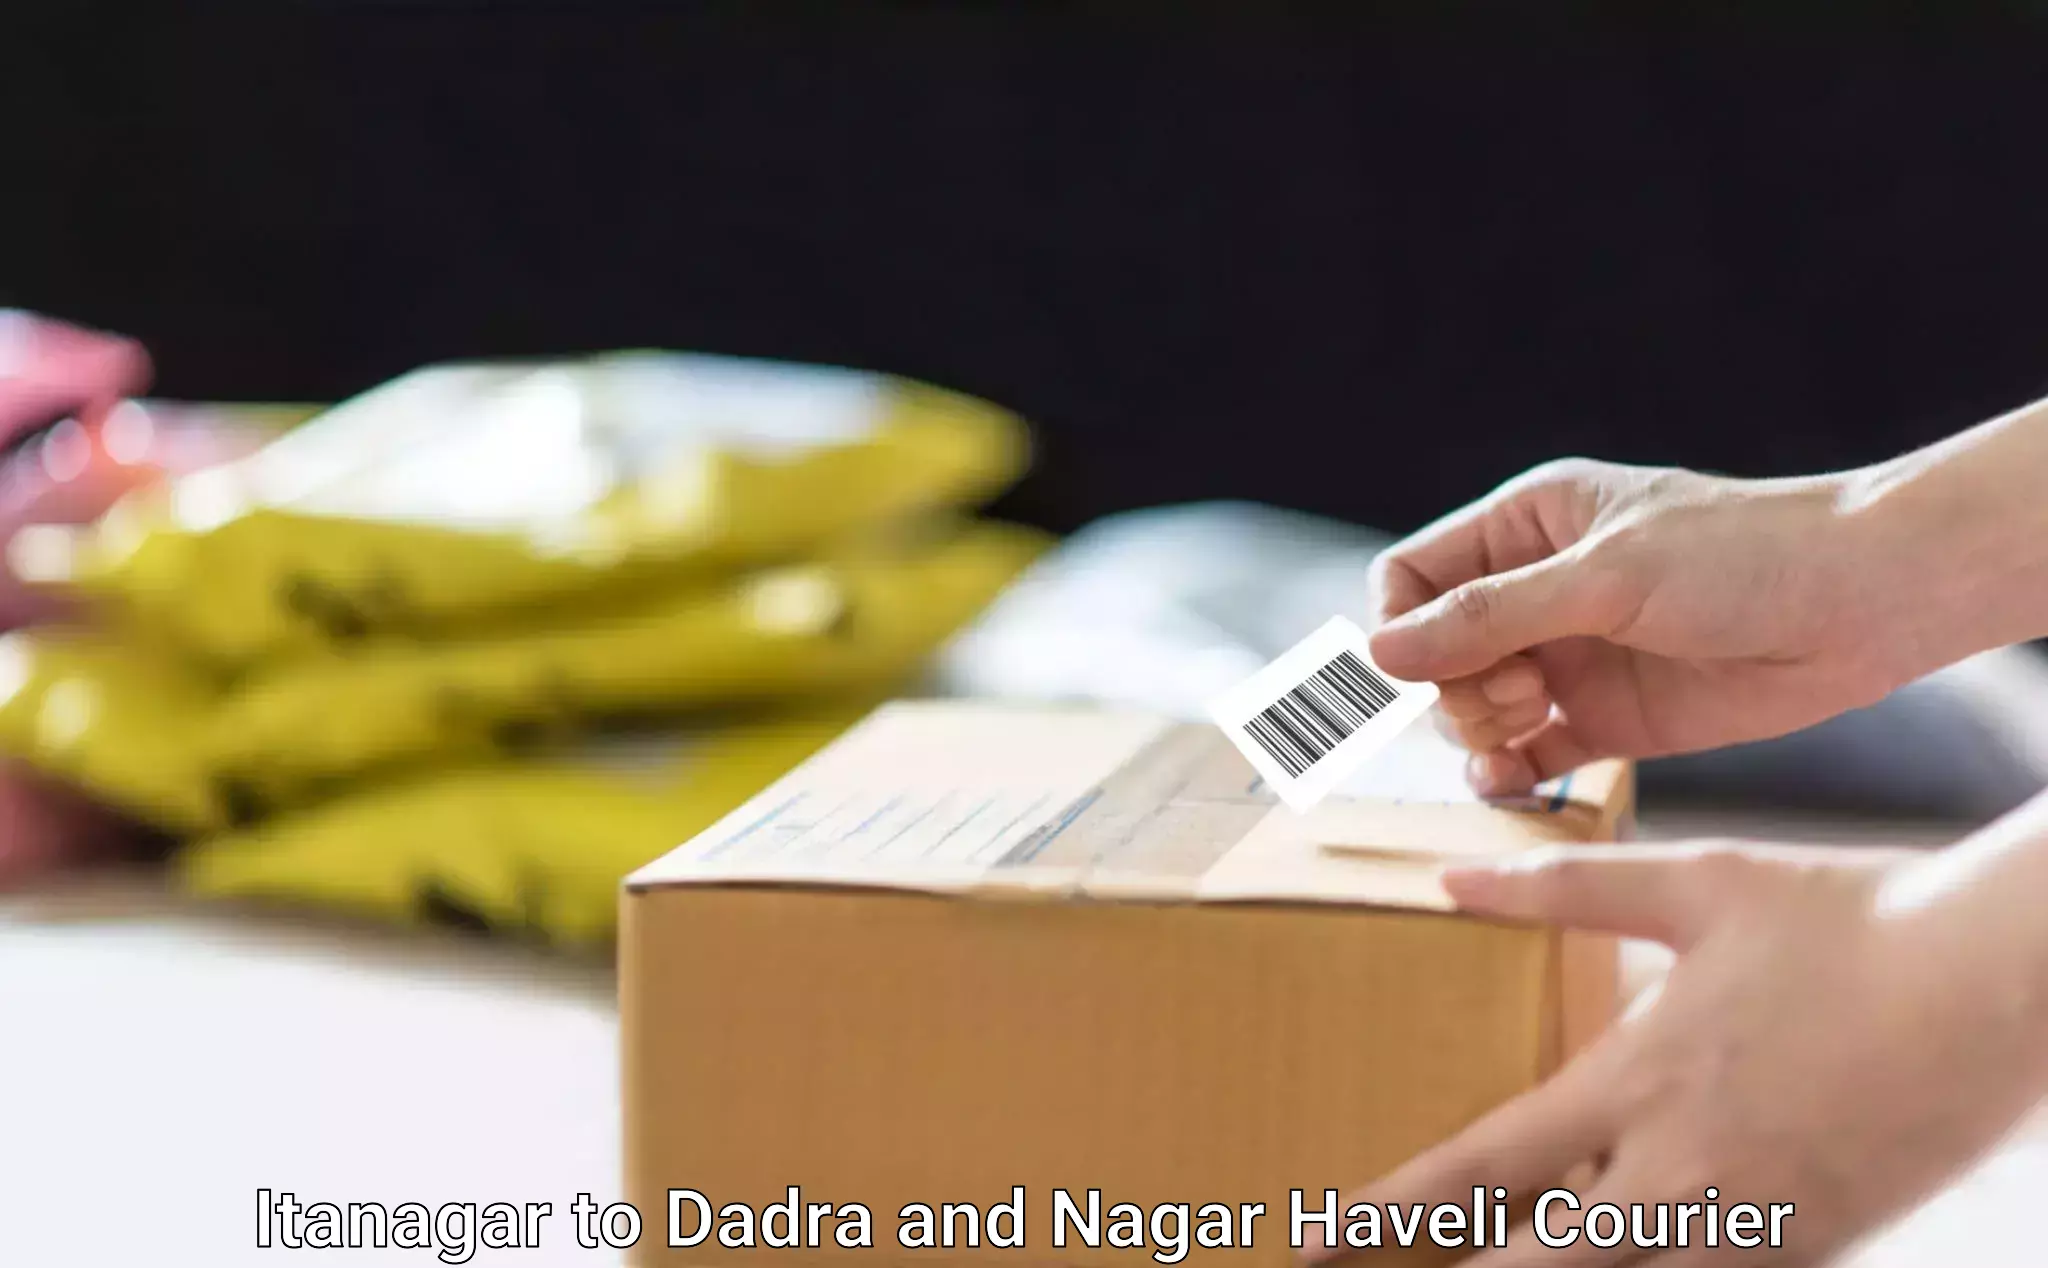 Nationwide parcel services Itanagar to Dadra and Nagar Haveli